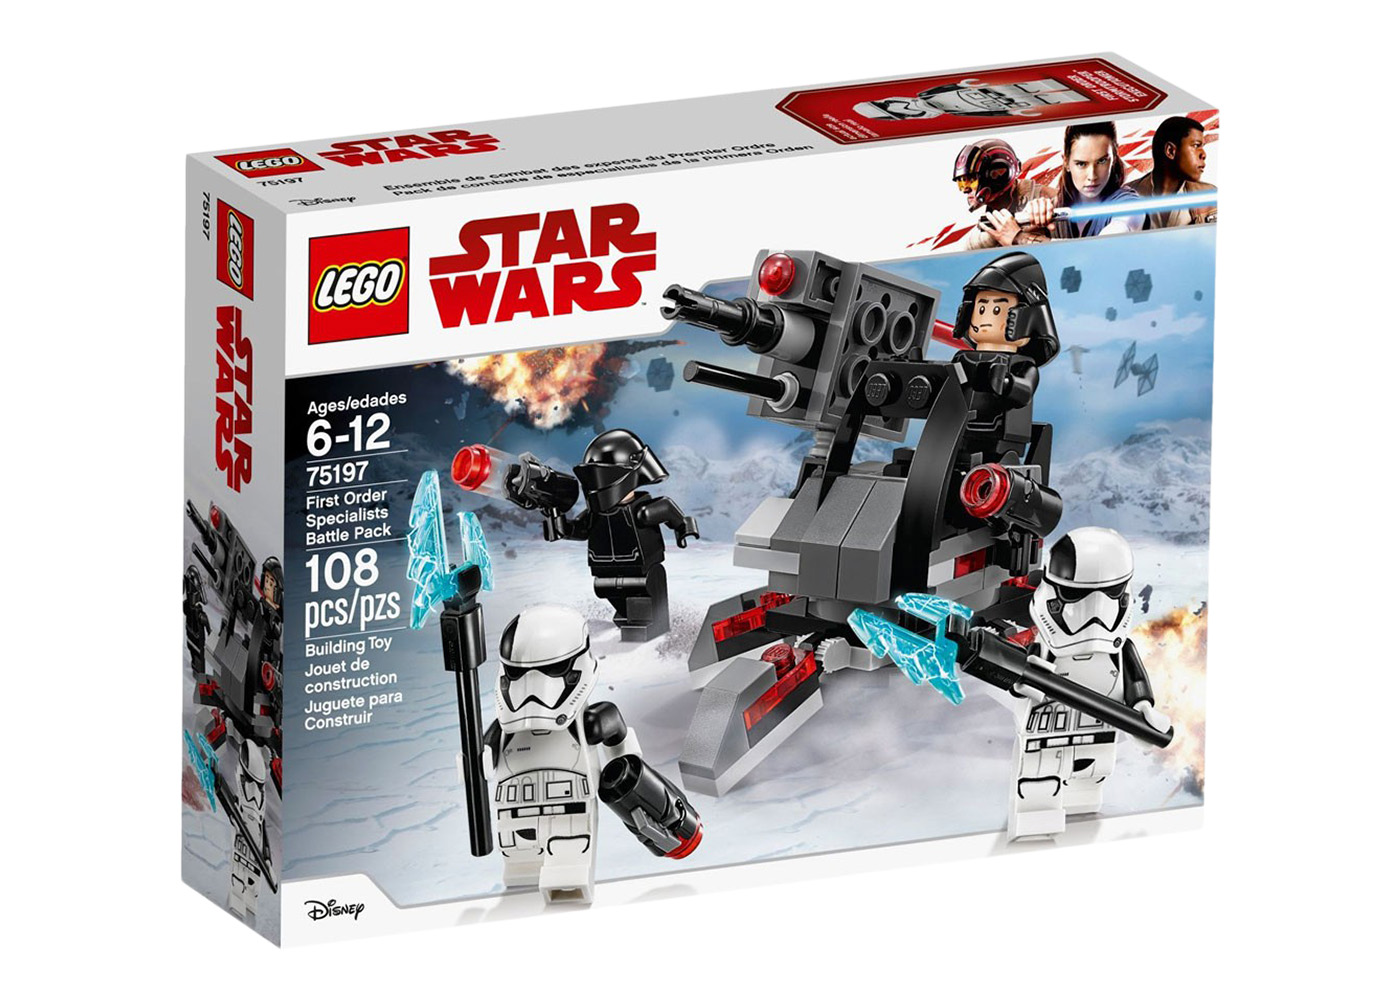 LEGO Star Wars Mandalorian Battle Pack Set 75267 - JP